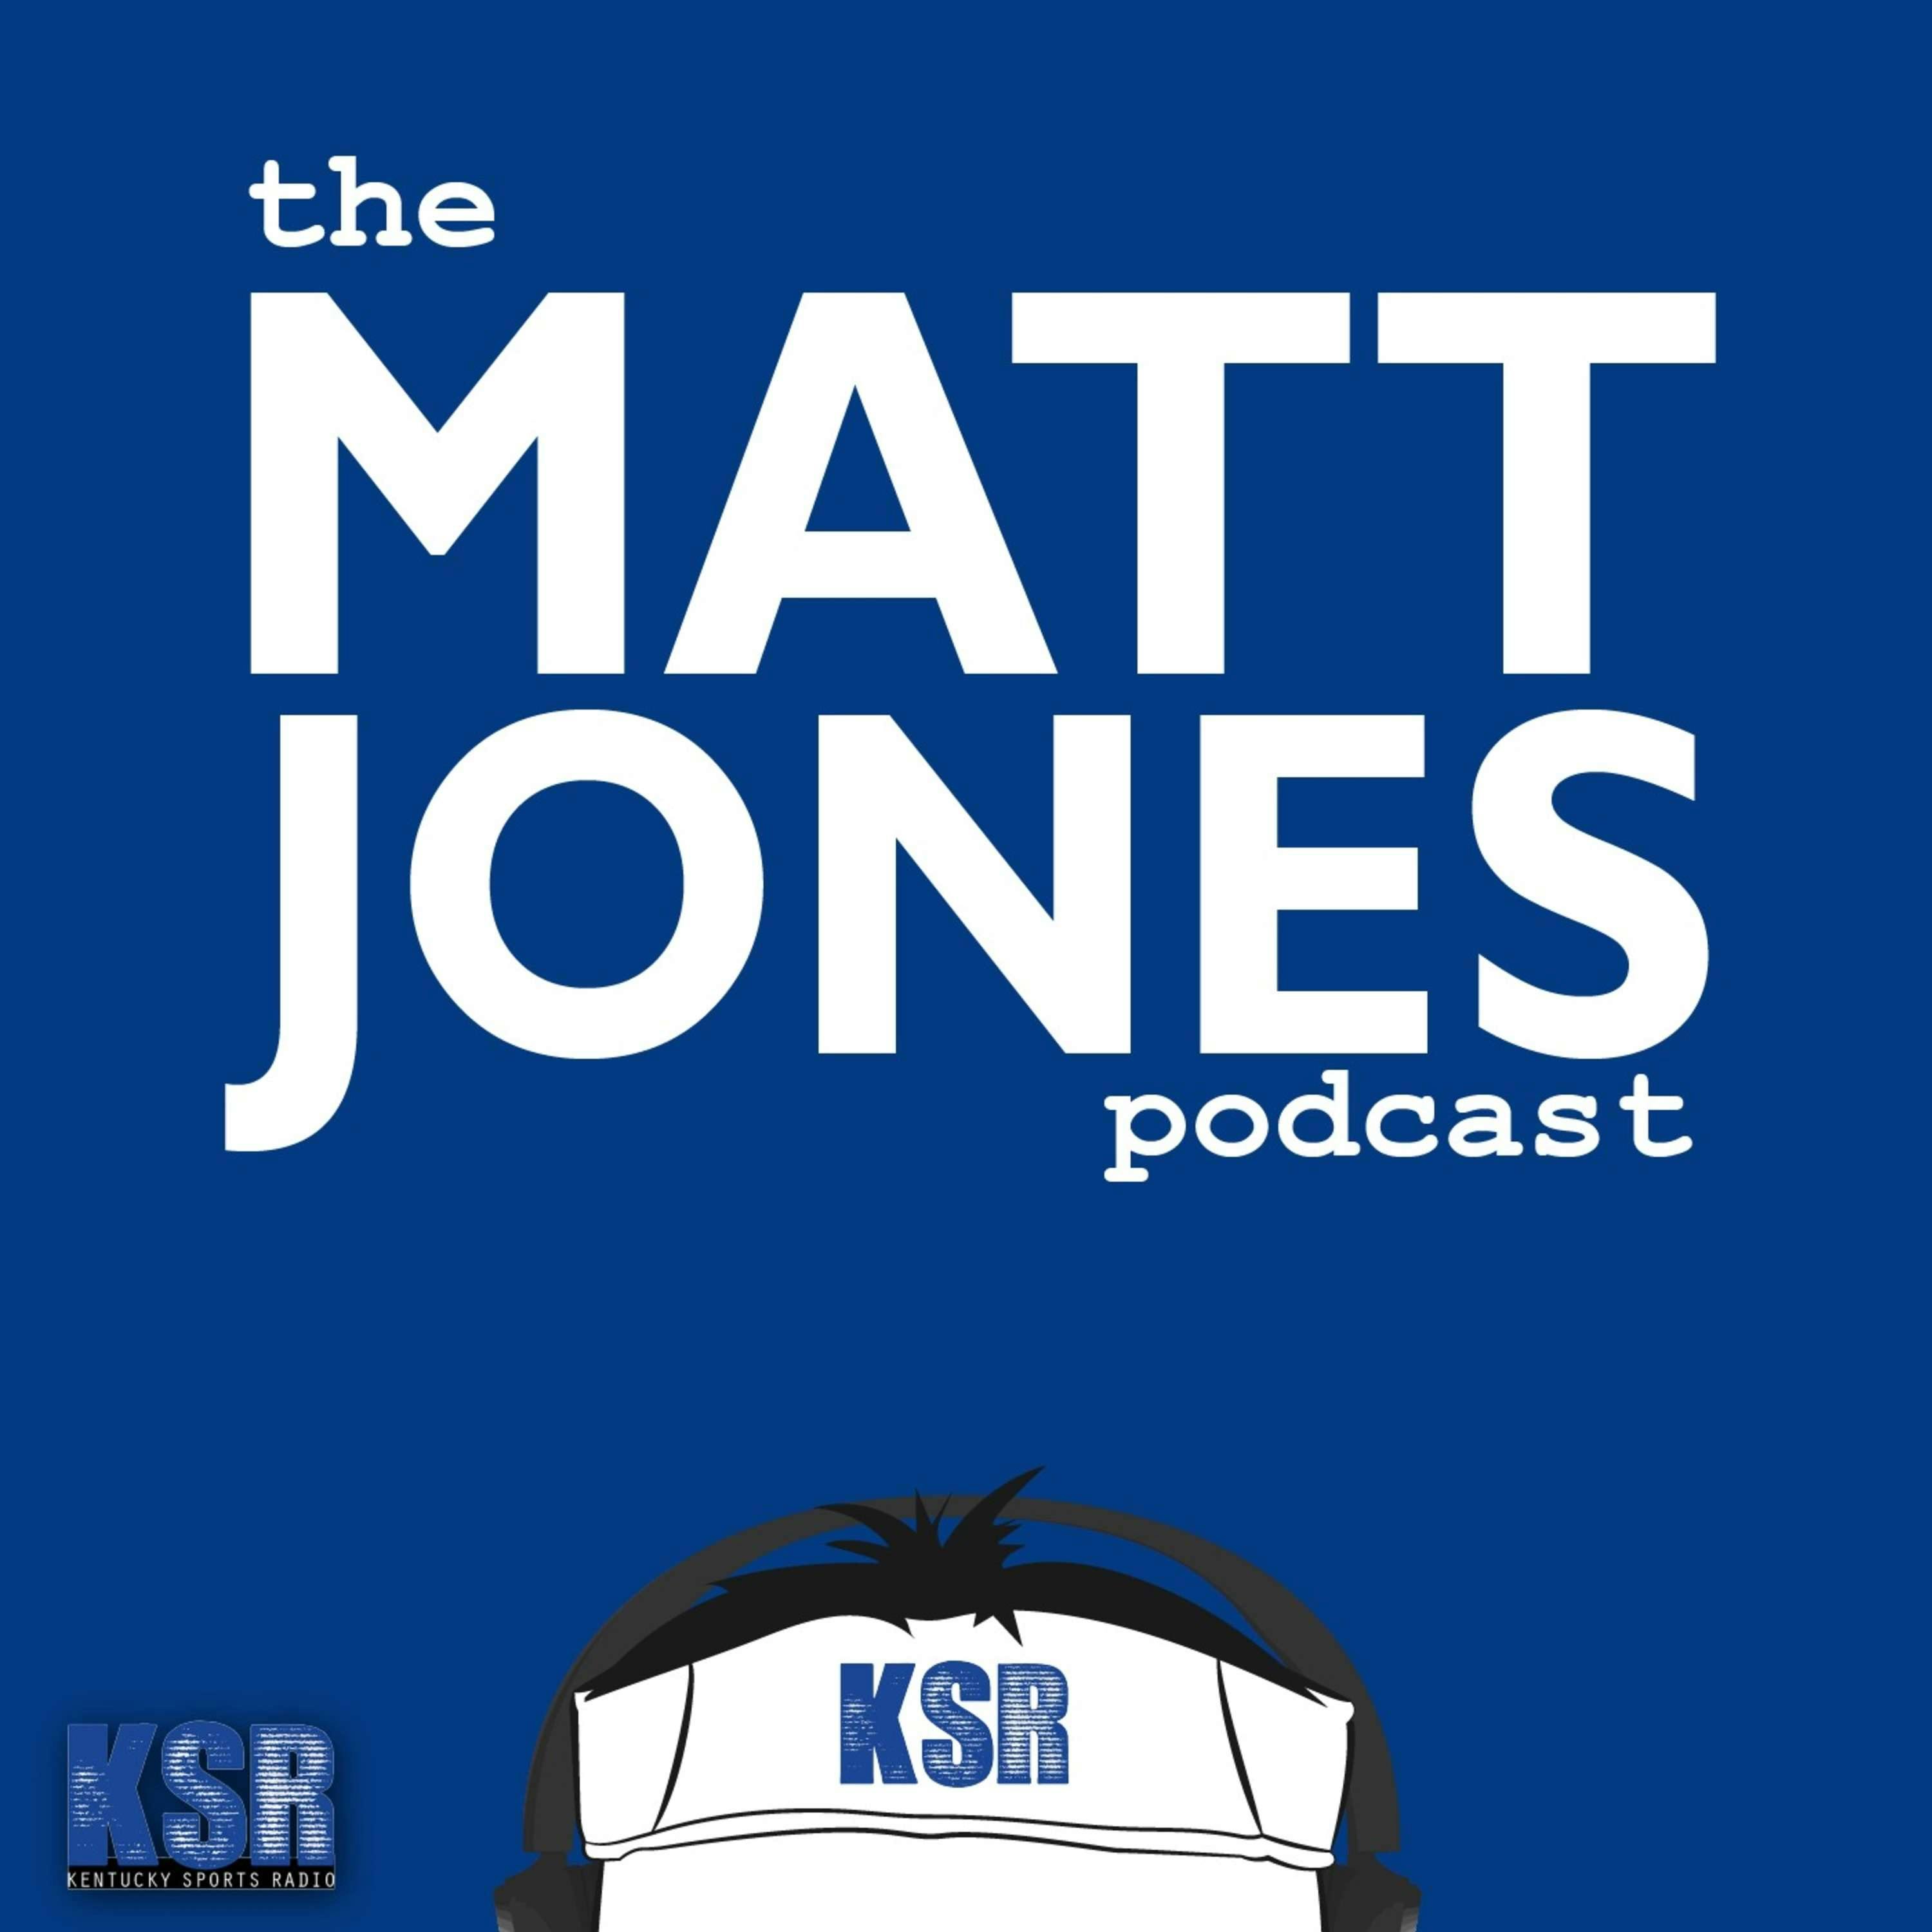 The Matt Jones Podcast: E44 Barrett Sallee, Josh Hopkins & a Surprise